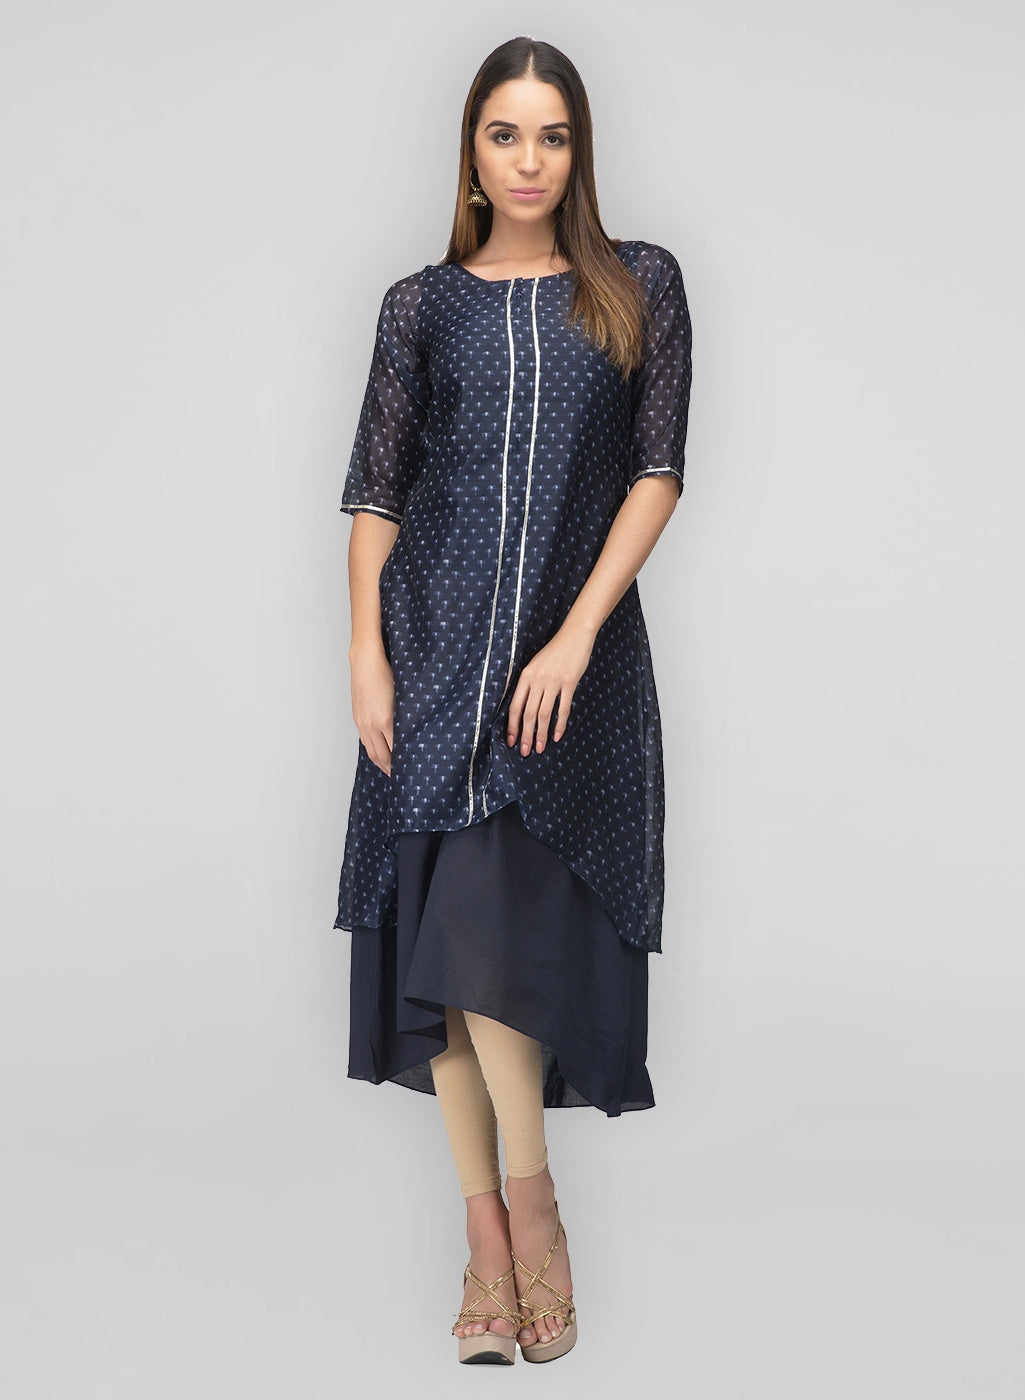 Wear this stylish kurta dress from thesvaya.